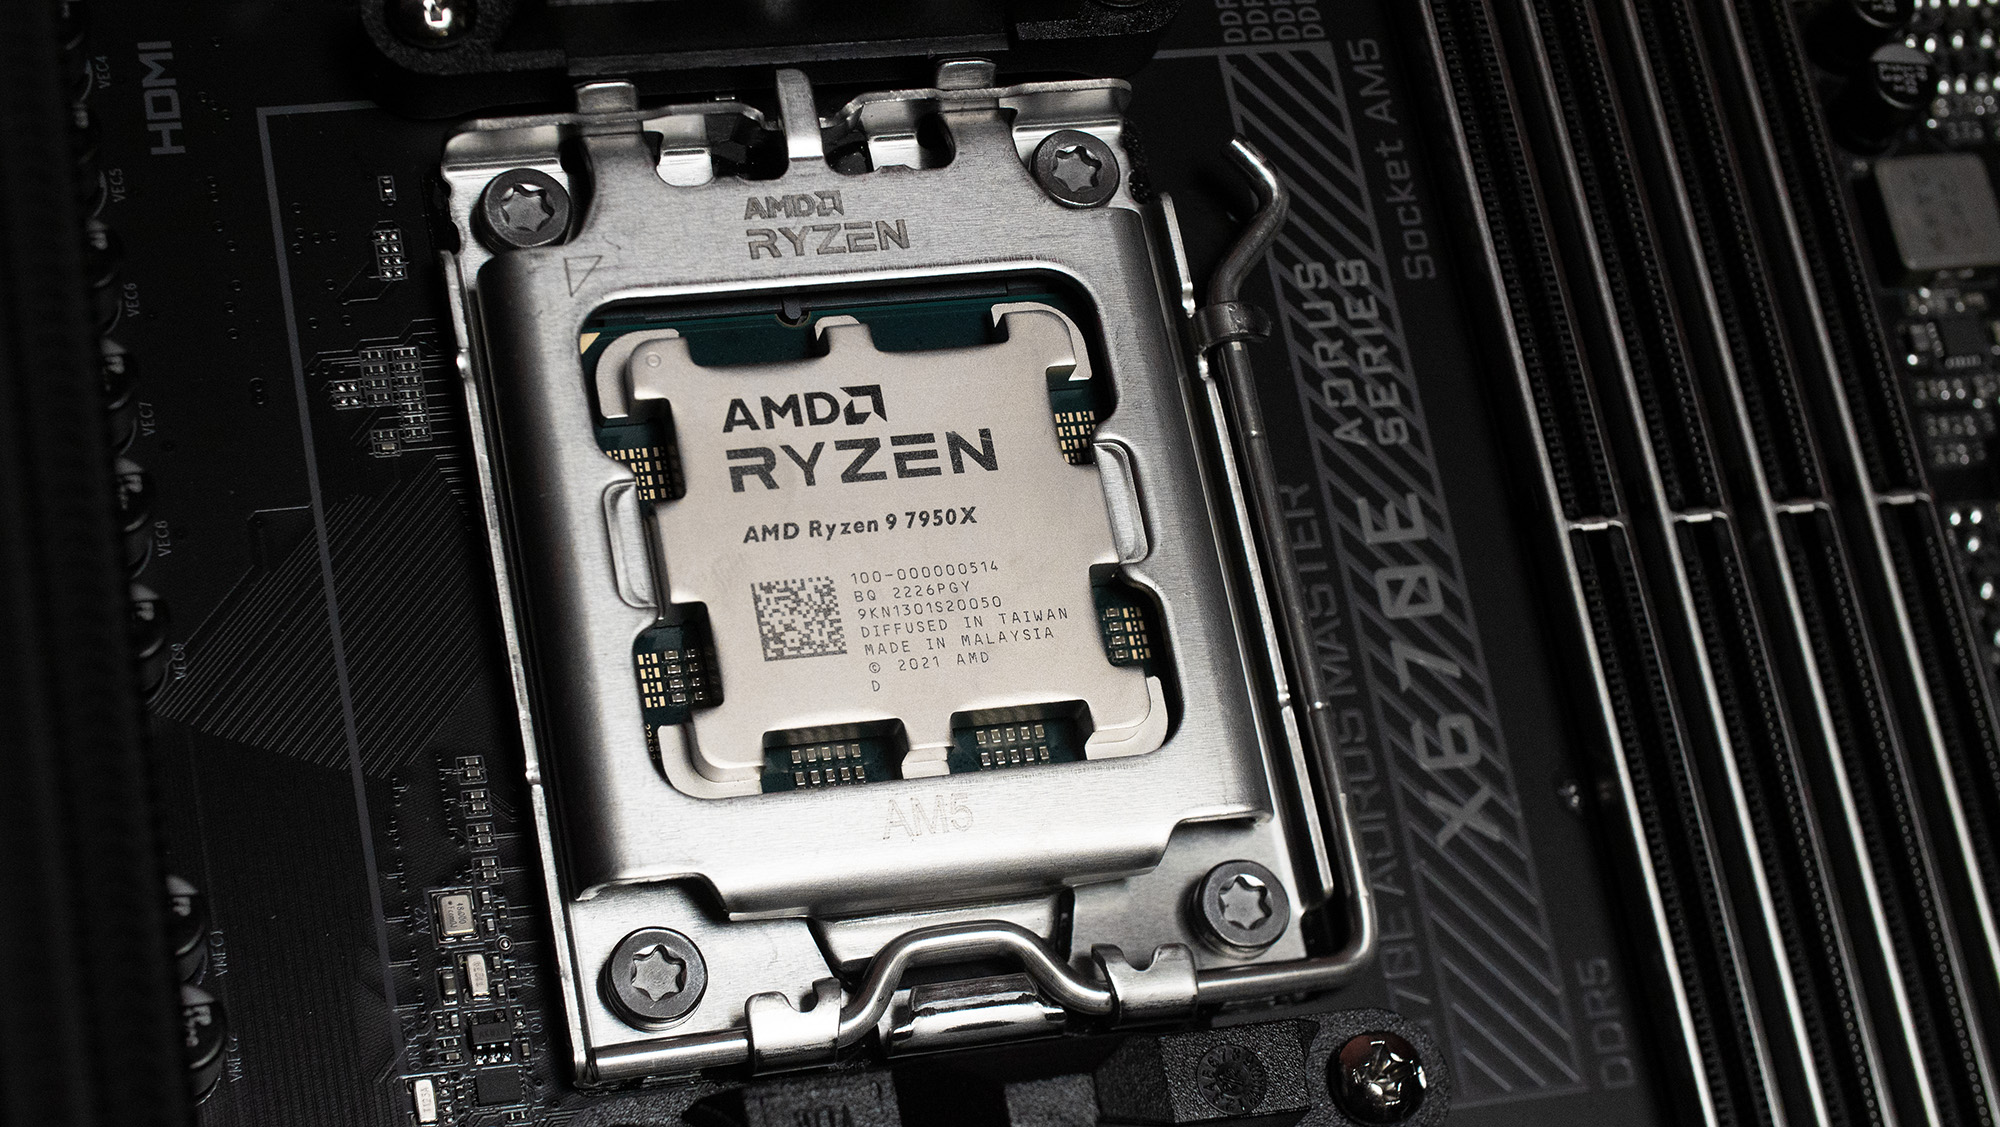 AMD Ryzen 9 7950X and AM5 socket